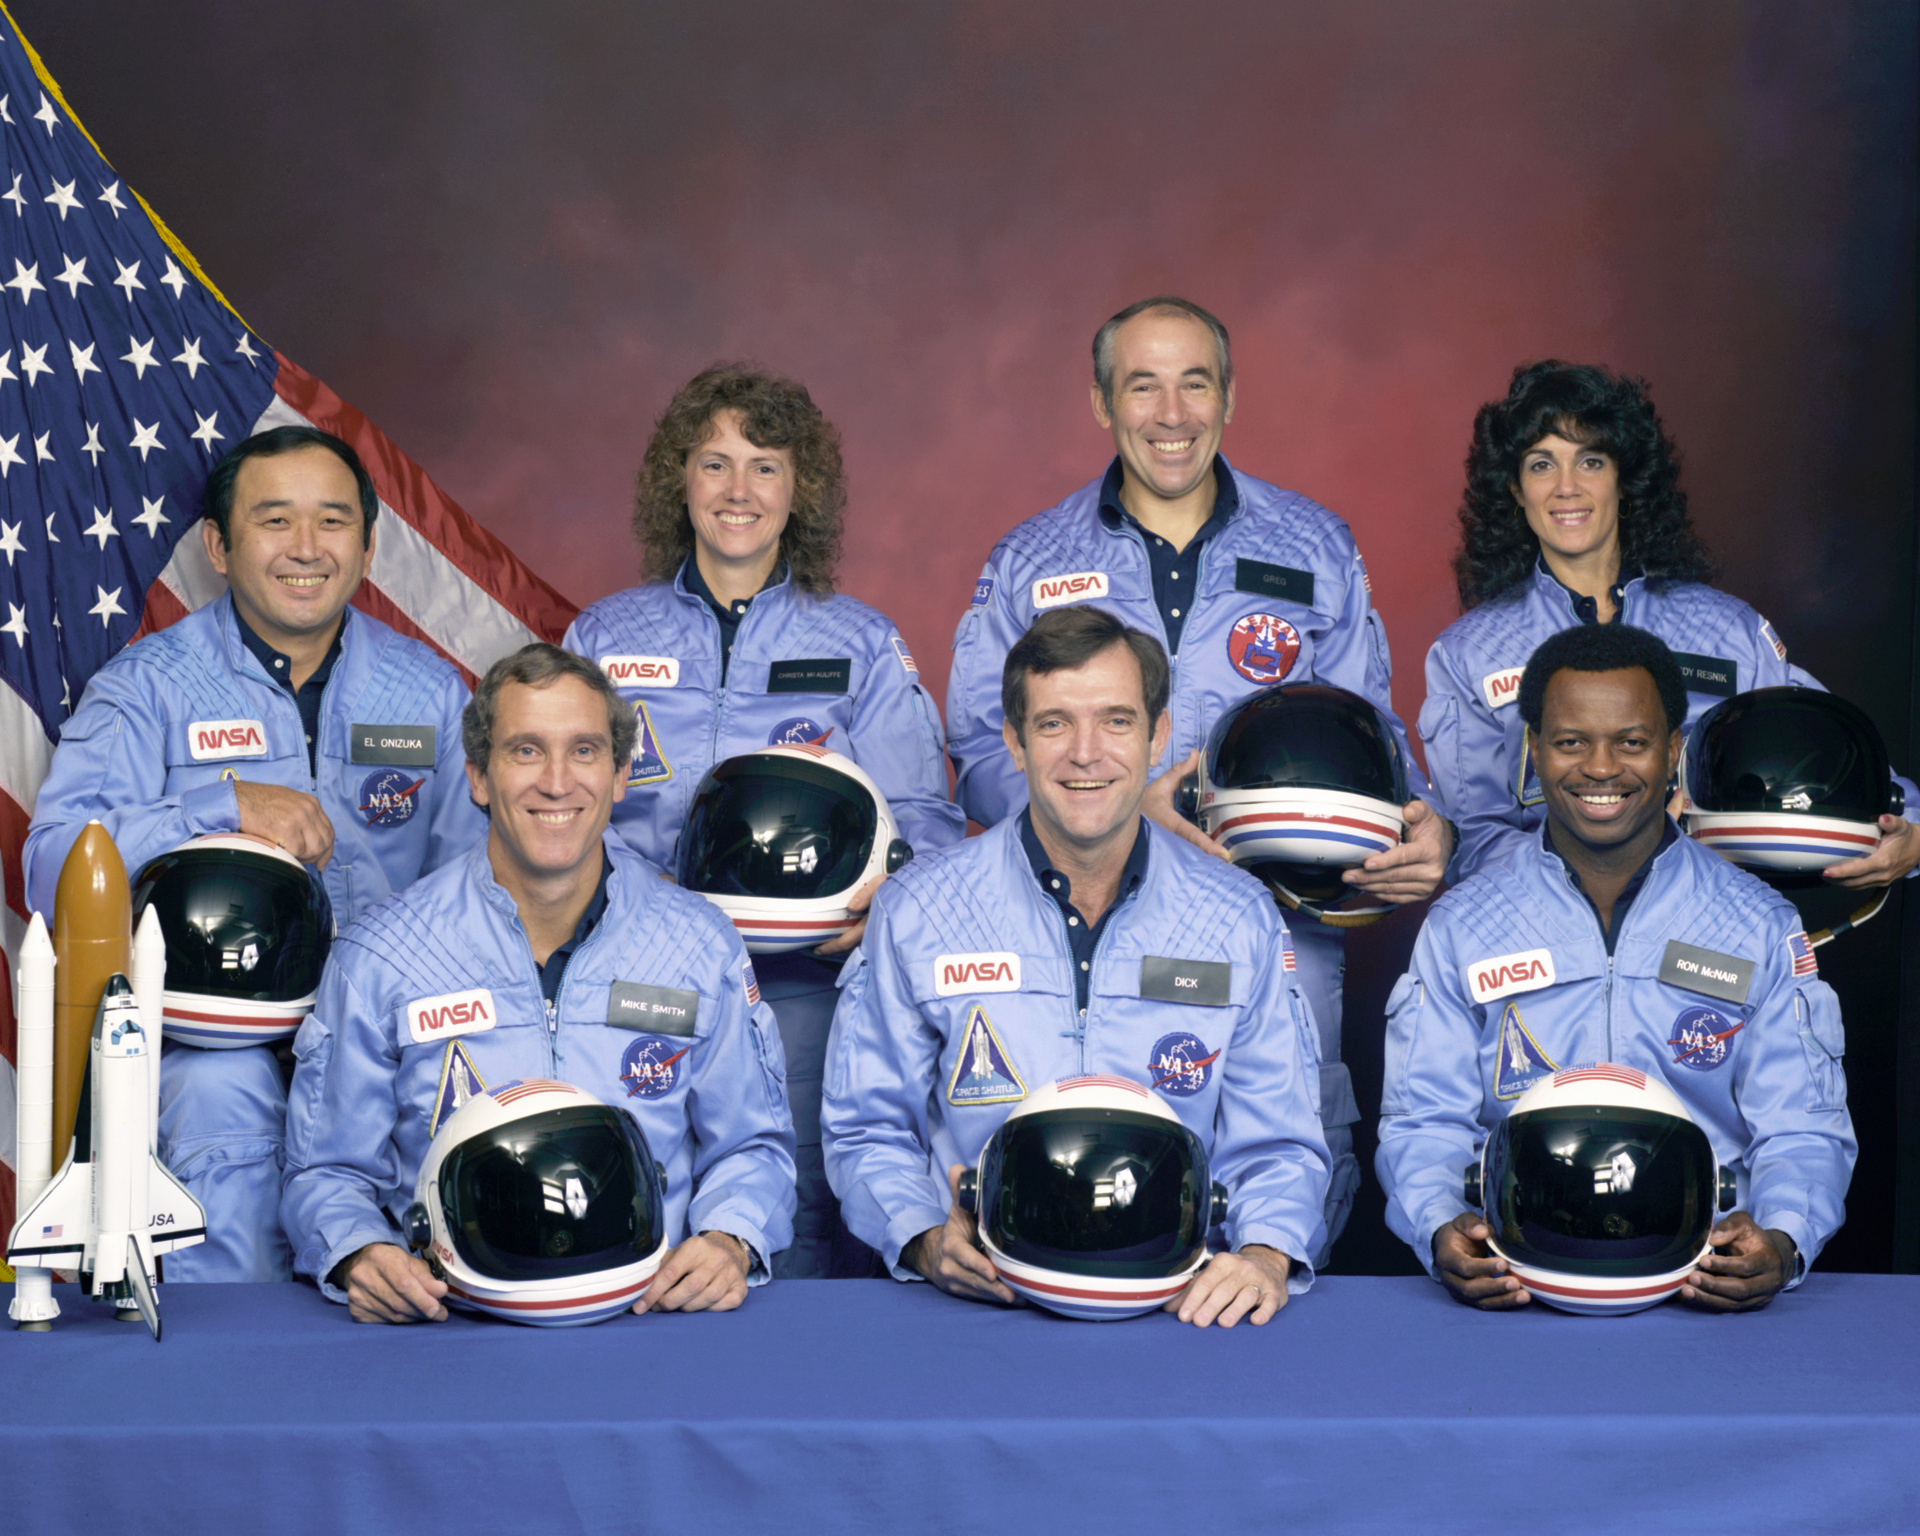 Accident Columbia - STS-51L - équipage - crew - Christa McAuliffe - Gregory B. Jarvis - Judith A. Resnik - Francis R. Scobee  - Ronald E. McNair - Michael J. Smith  - Ellison S. Onizuka